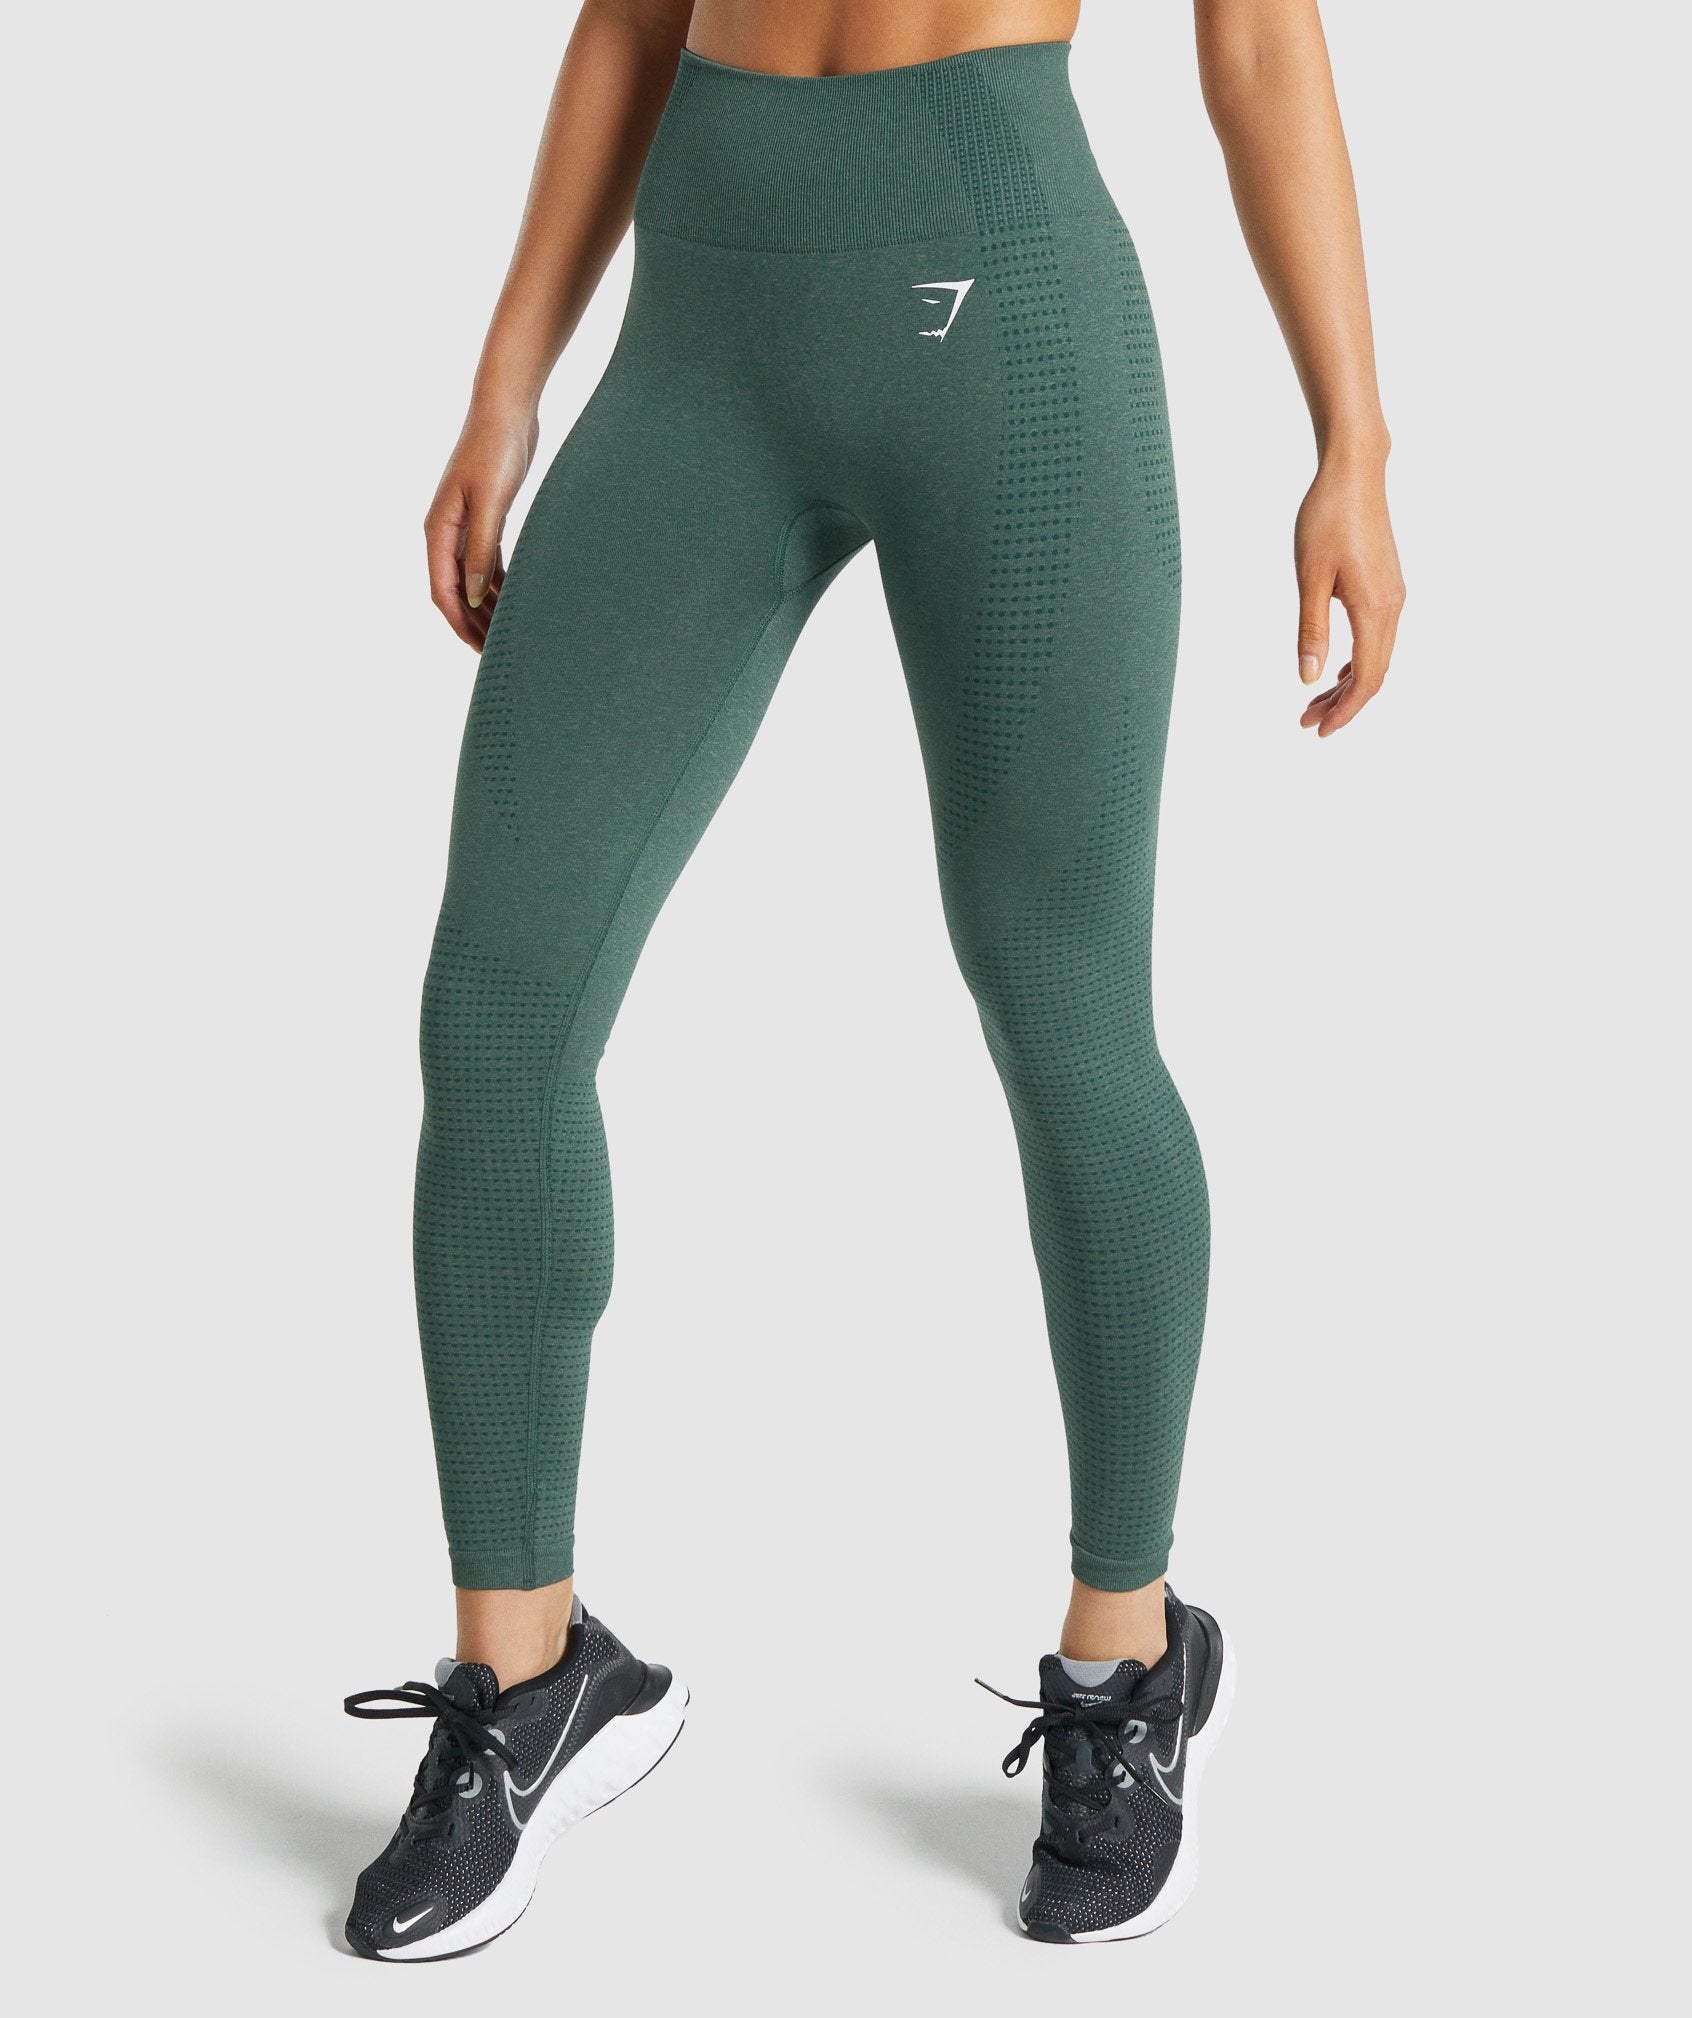 Gymshark Jade Green Chalk Leggings Size XS